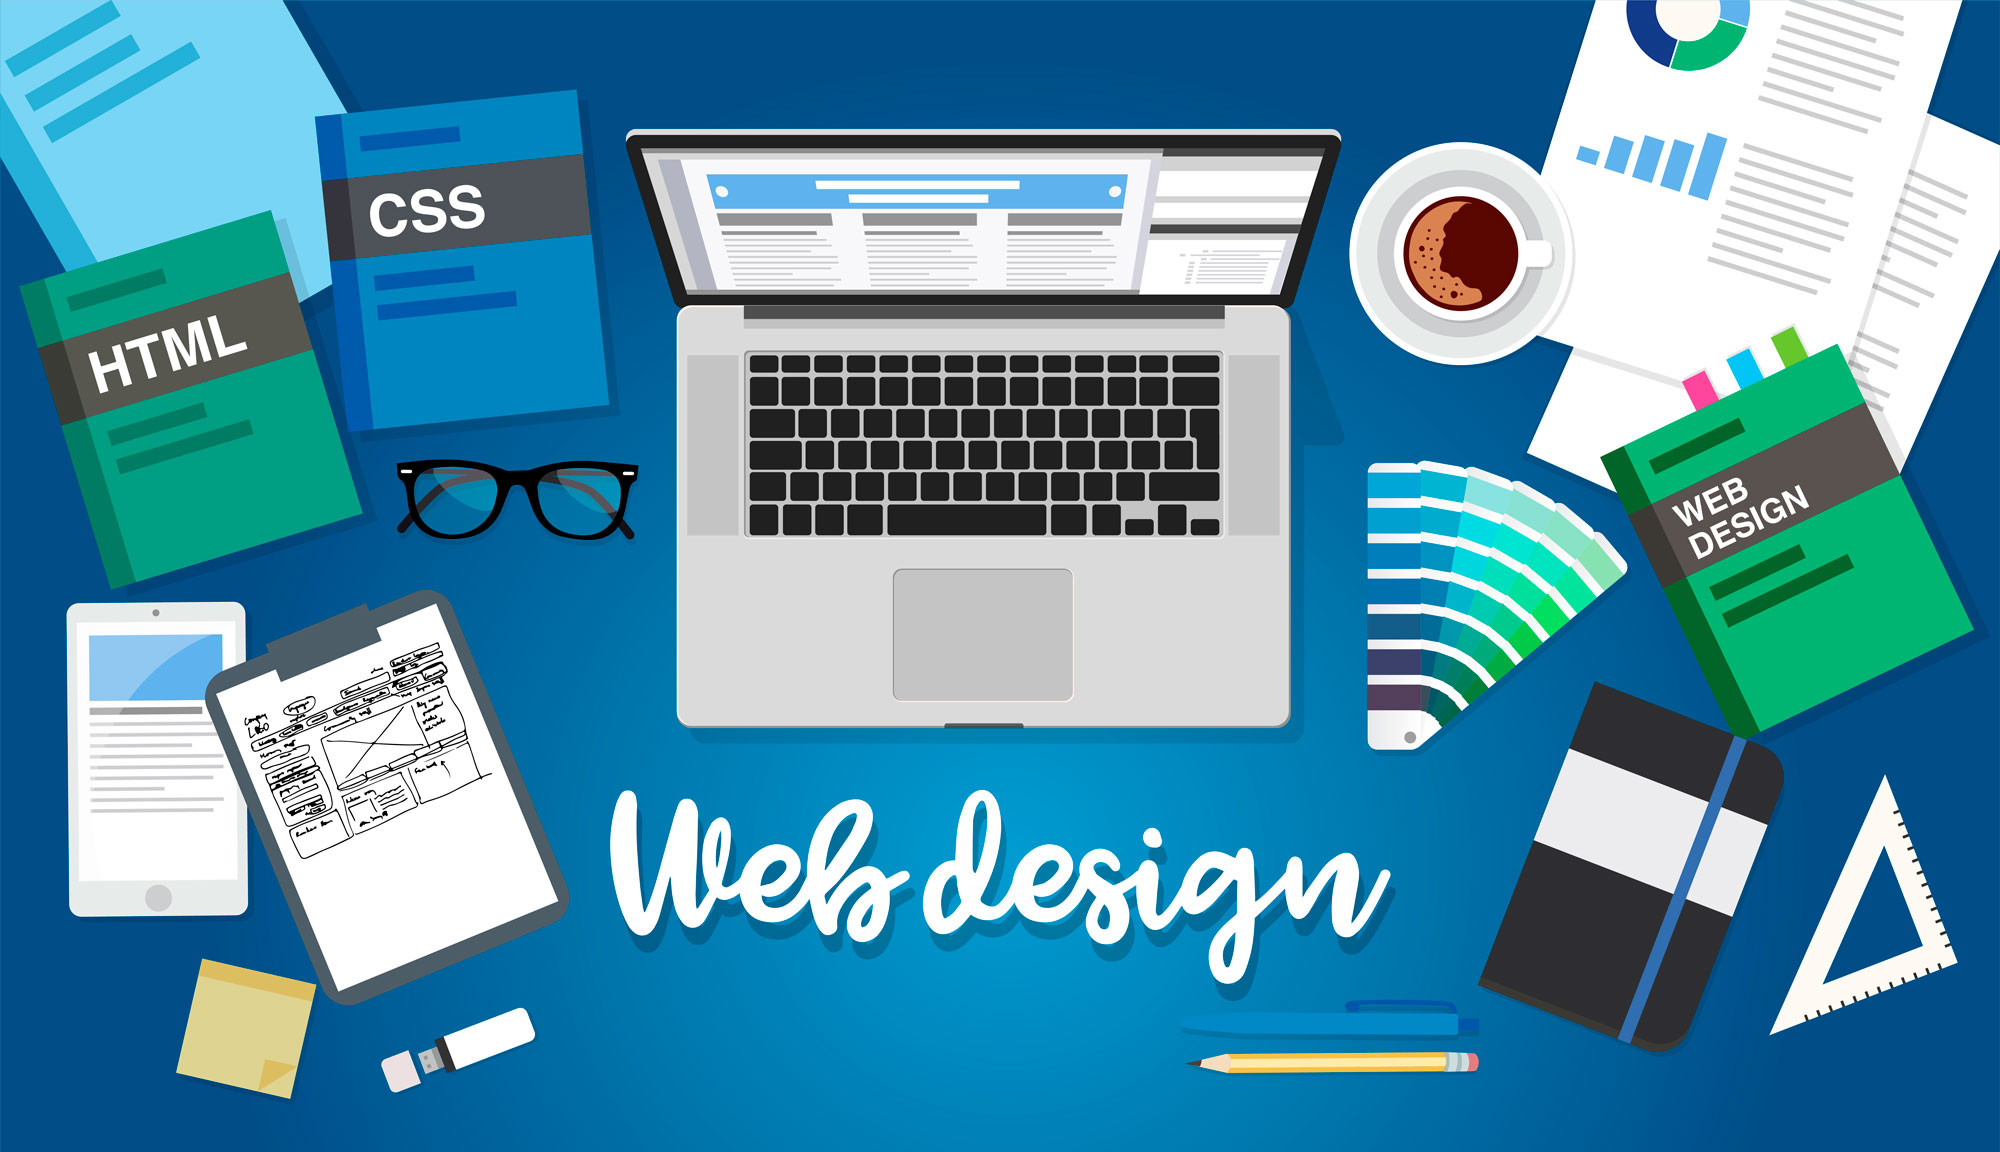 Web design is. Веб дизайн. Дизайн html. Веб-дизайн - Junior. Веб дизайн html CSS.